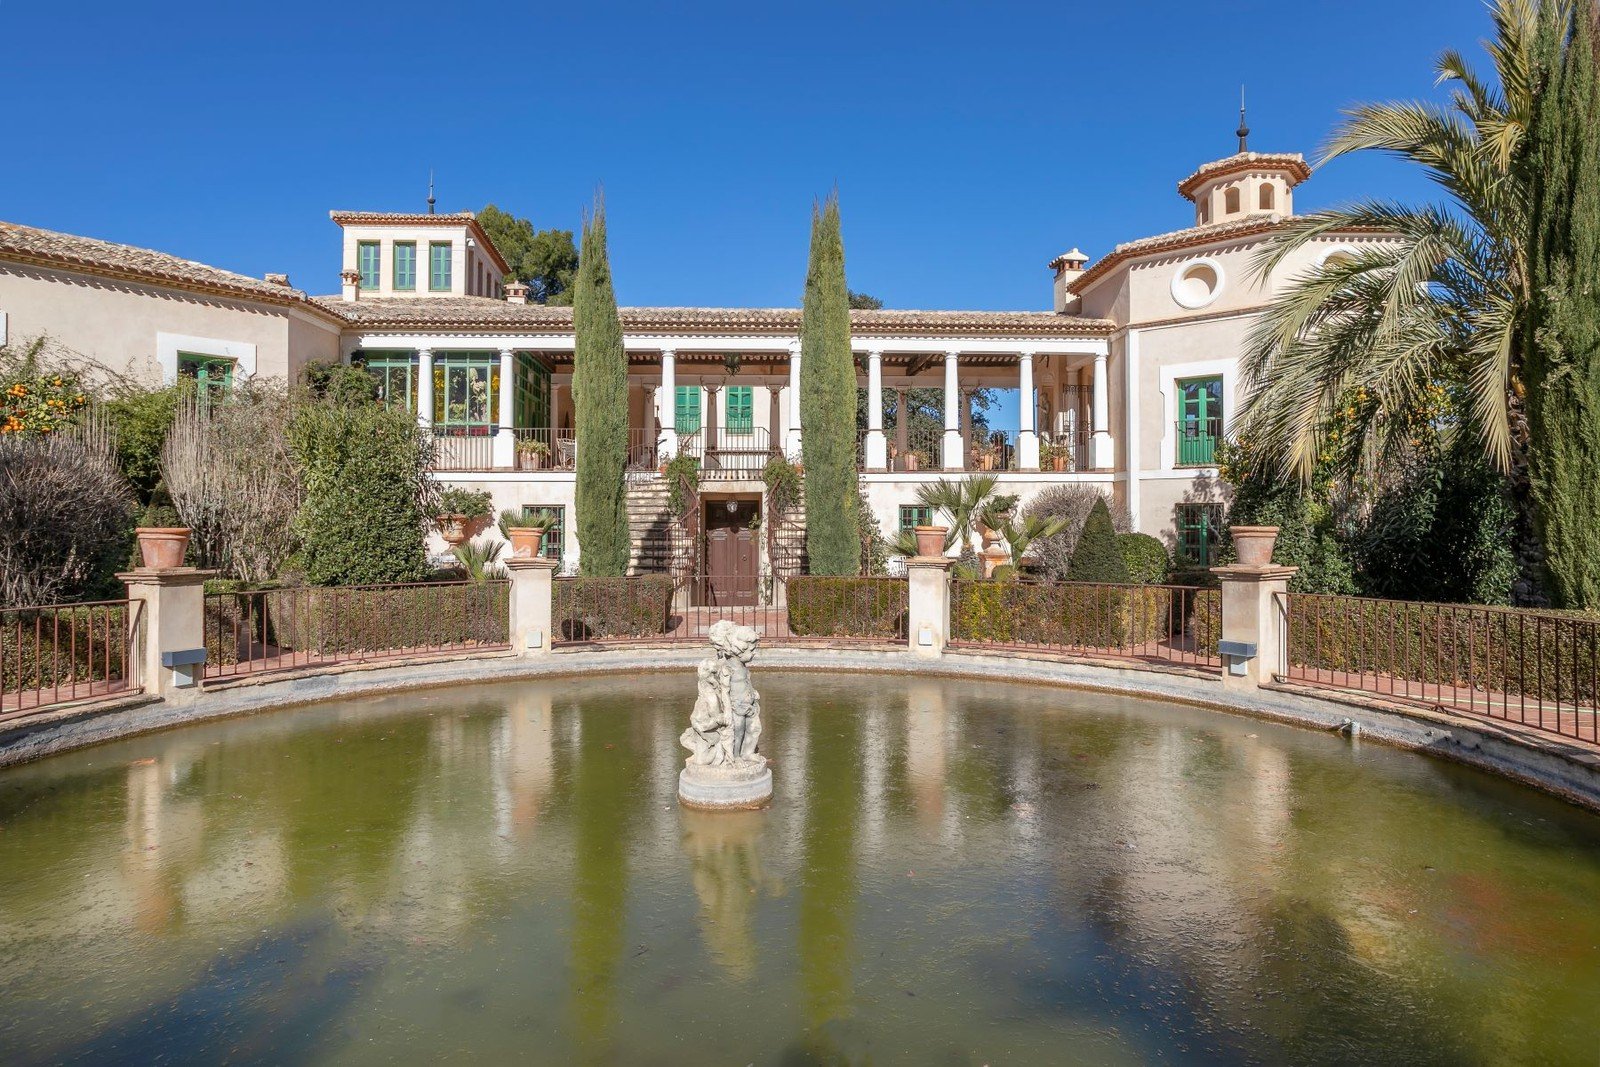 Francis York Stunning Hacienda in the Costa Blanca Hills Near Alicante, Spain 00002.jpeg